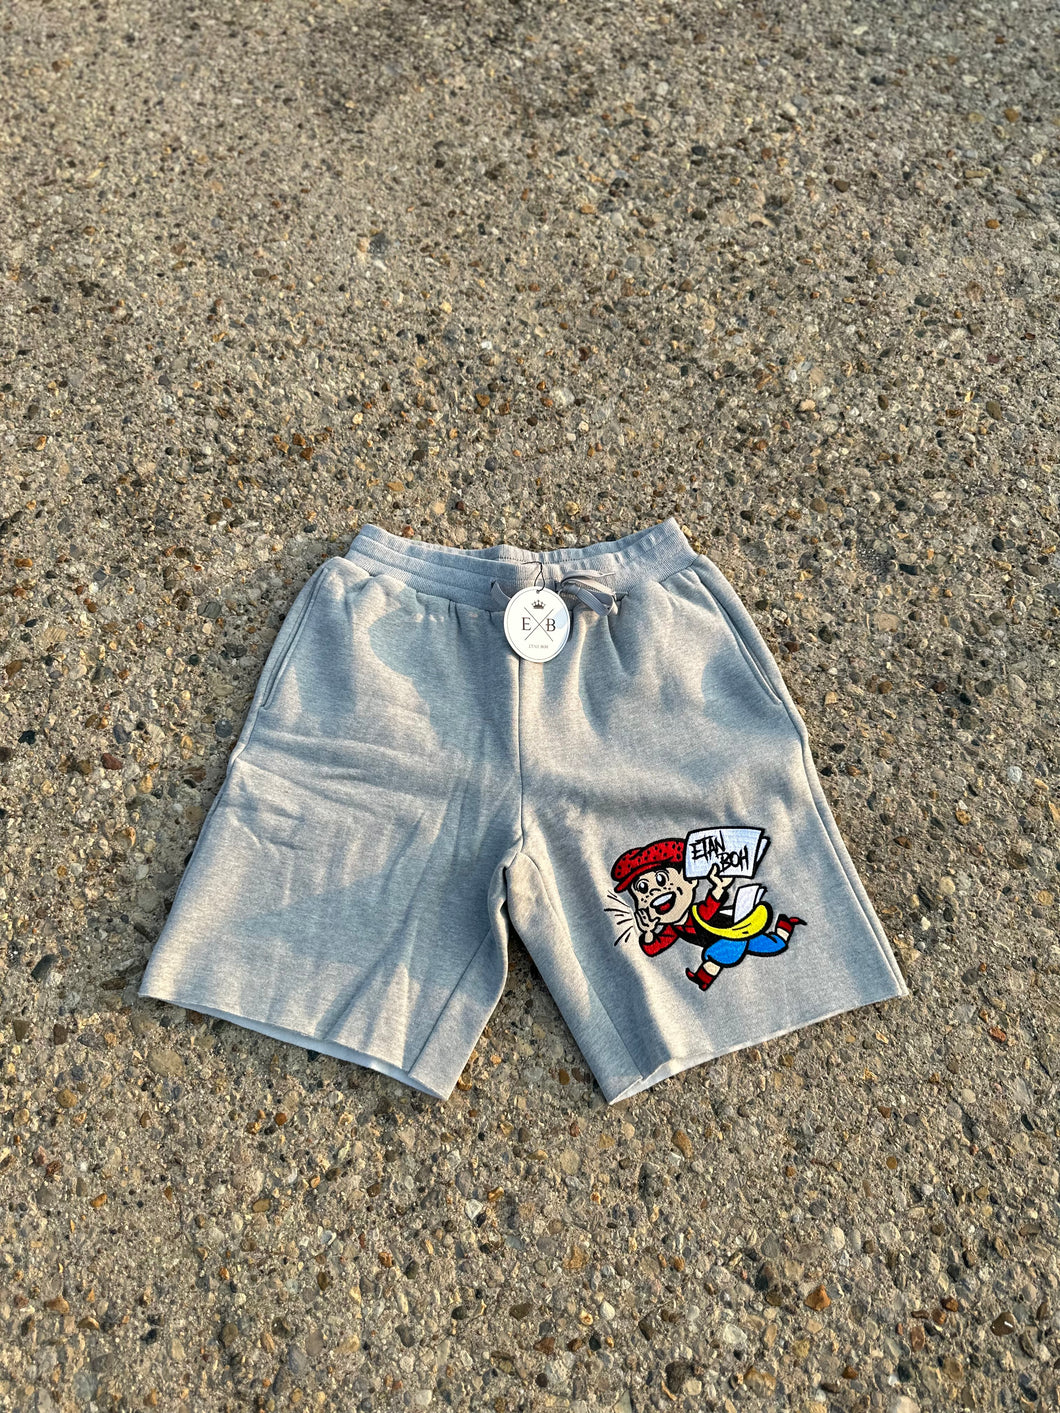 EtanBoh Logo Cut Off Shorts - Gray